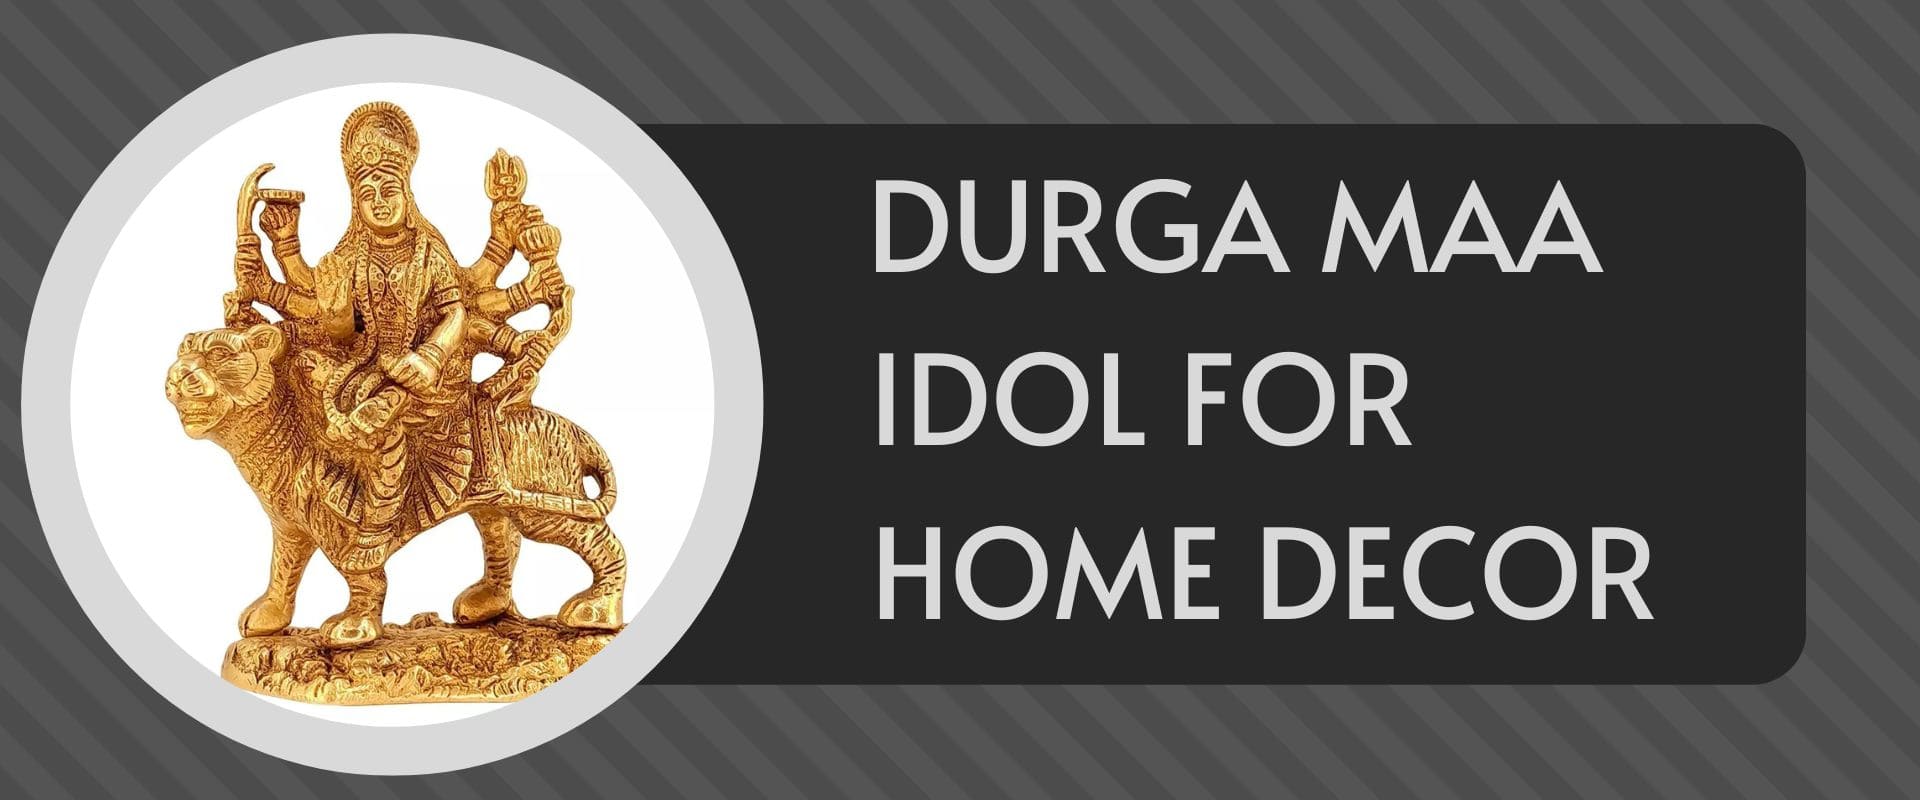 durga maa idol for home decor